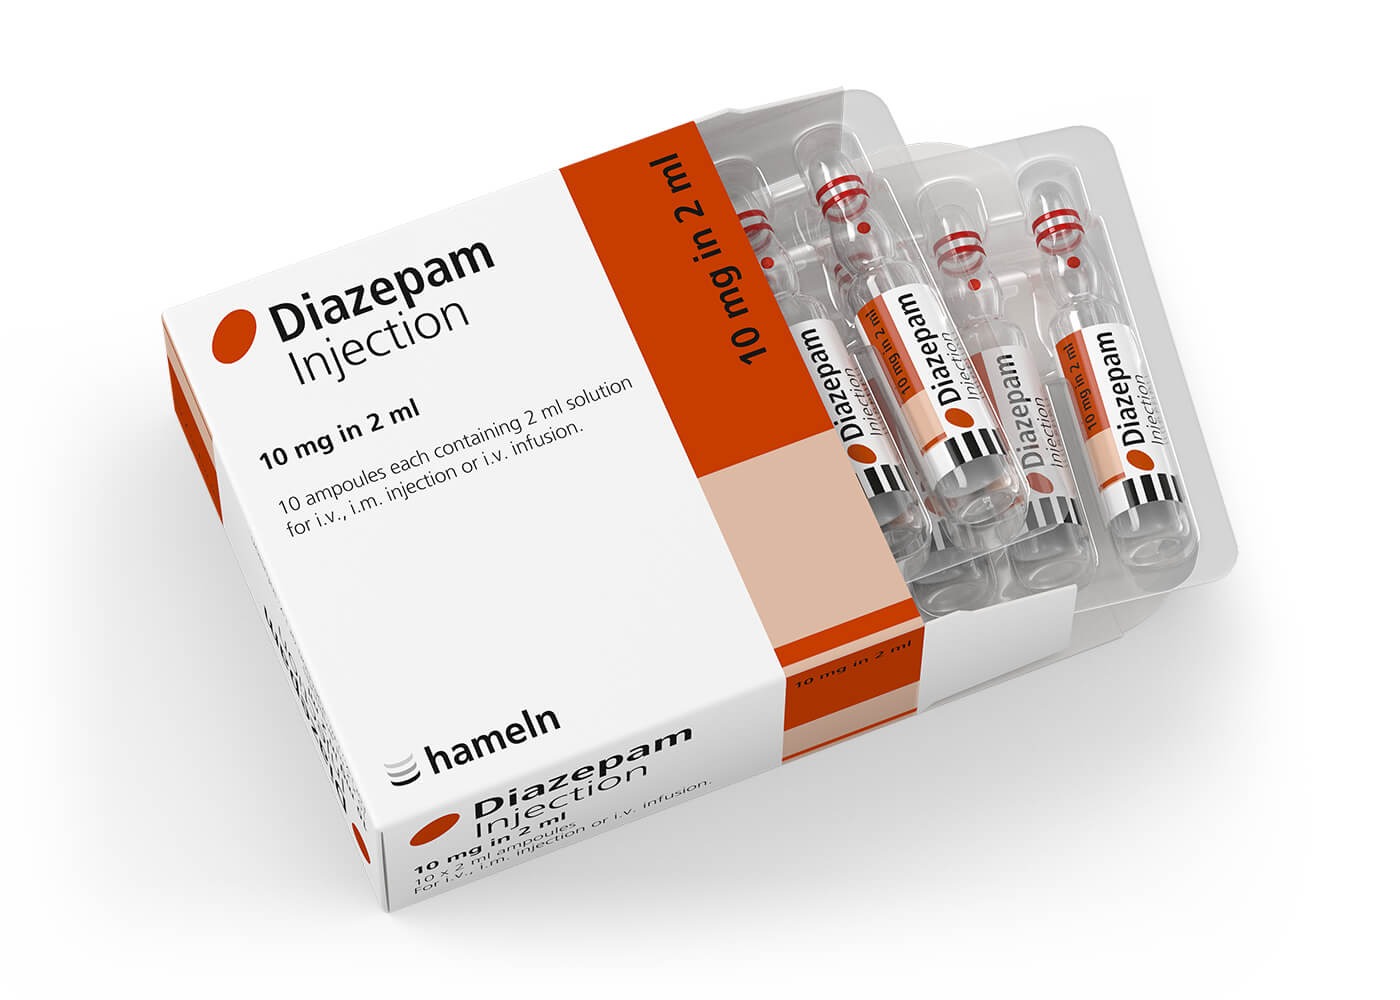 Diazepam_UK_5_mg_ml_in_2_ml_Pack-Amp_10St_2020-09